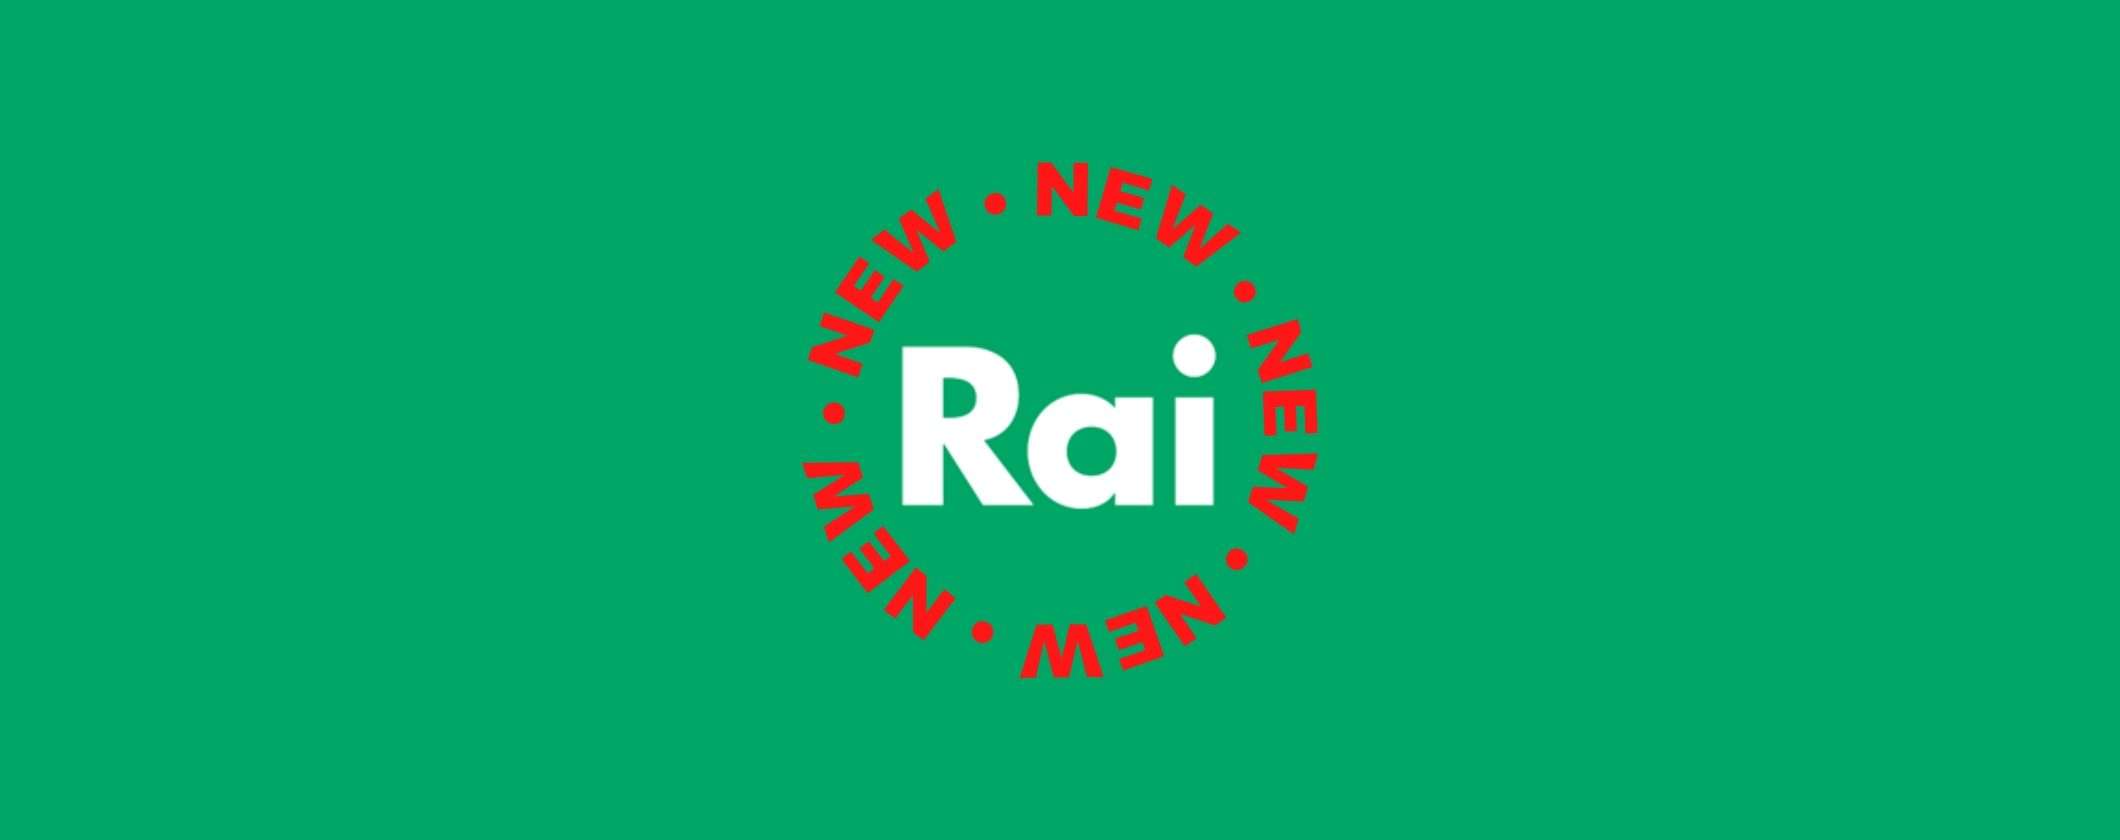 RAI amplia offerta tematica HD su digitale terrestre con HbbTV